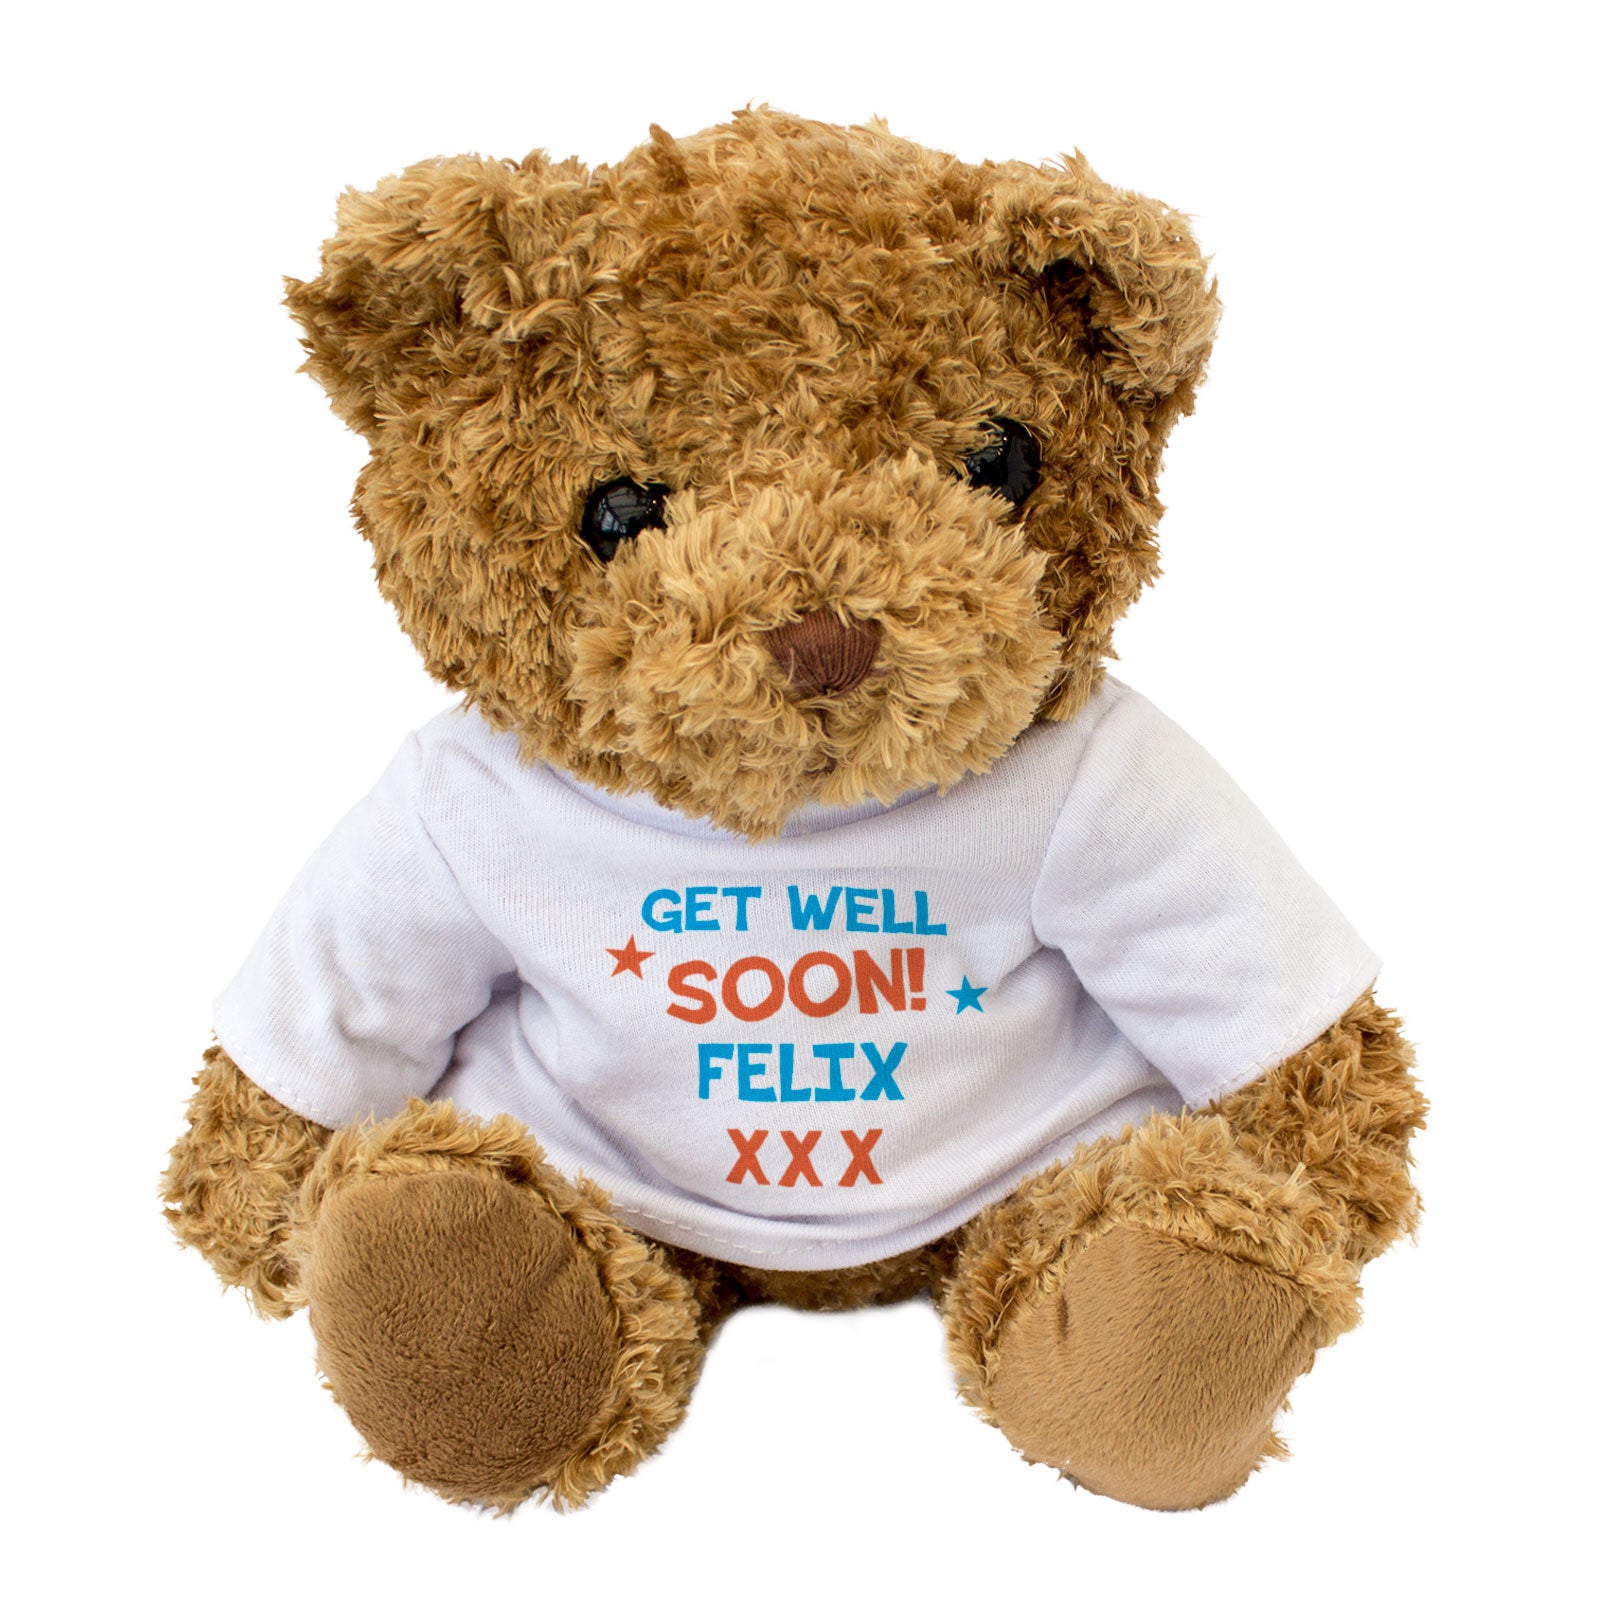 Get Well Soon Felix - Teddy Bear